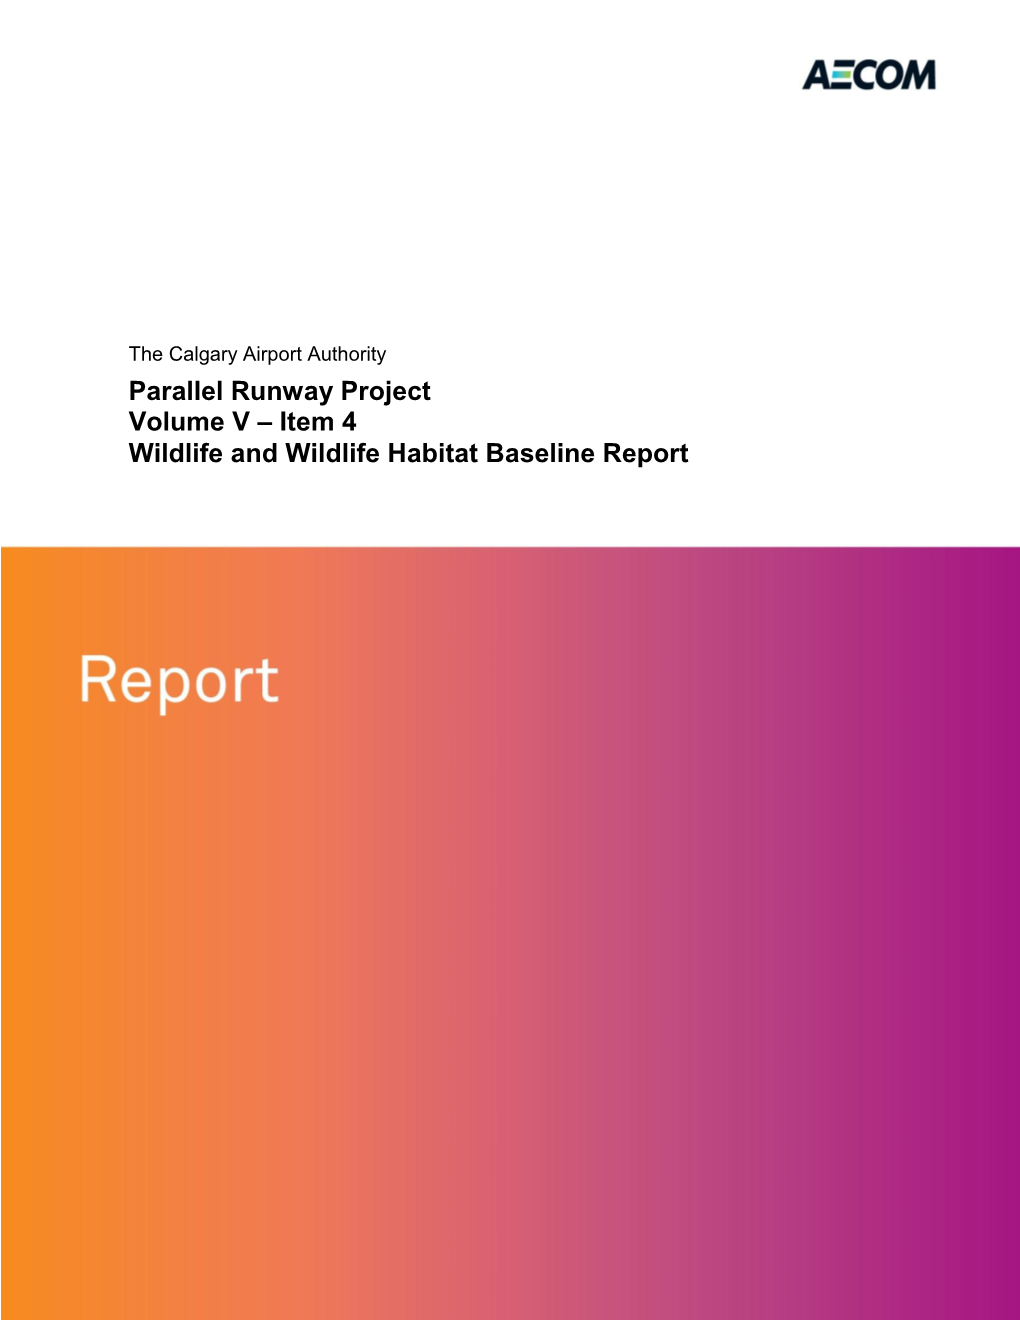 Item 4 Wildlife and Wildlife Habitat Baseline Report